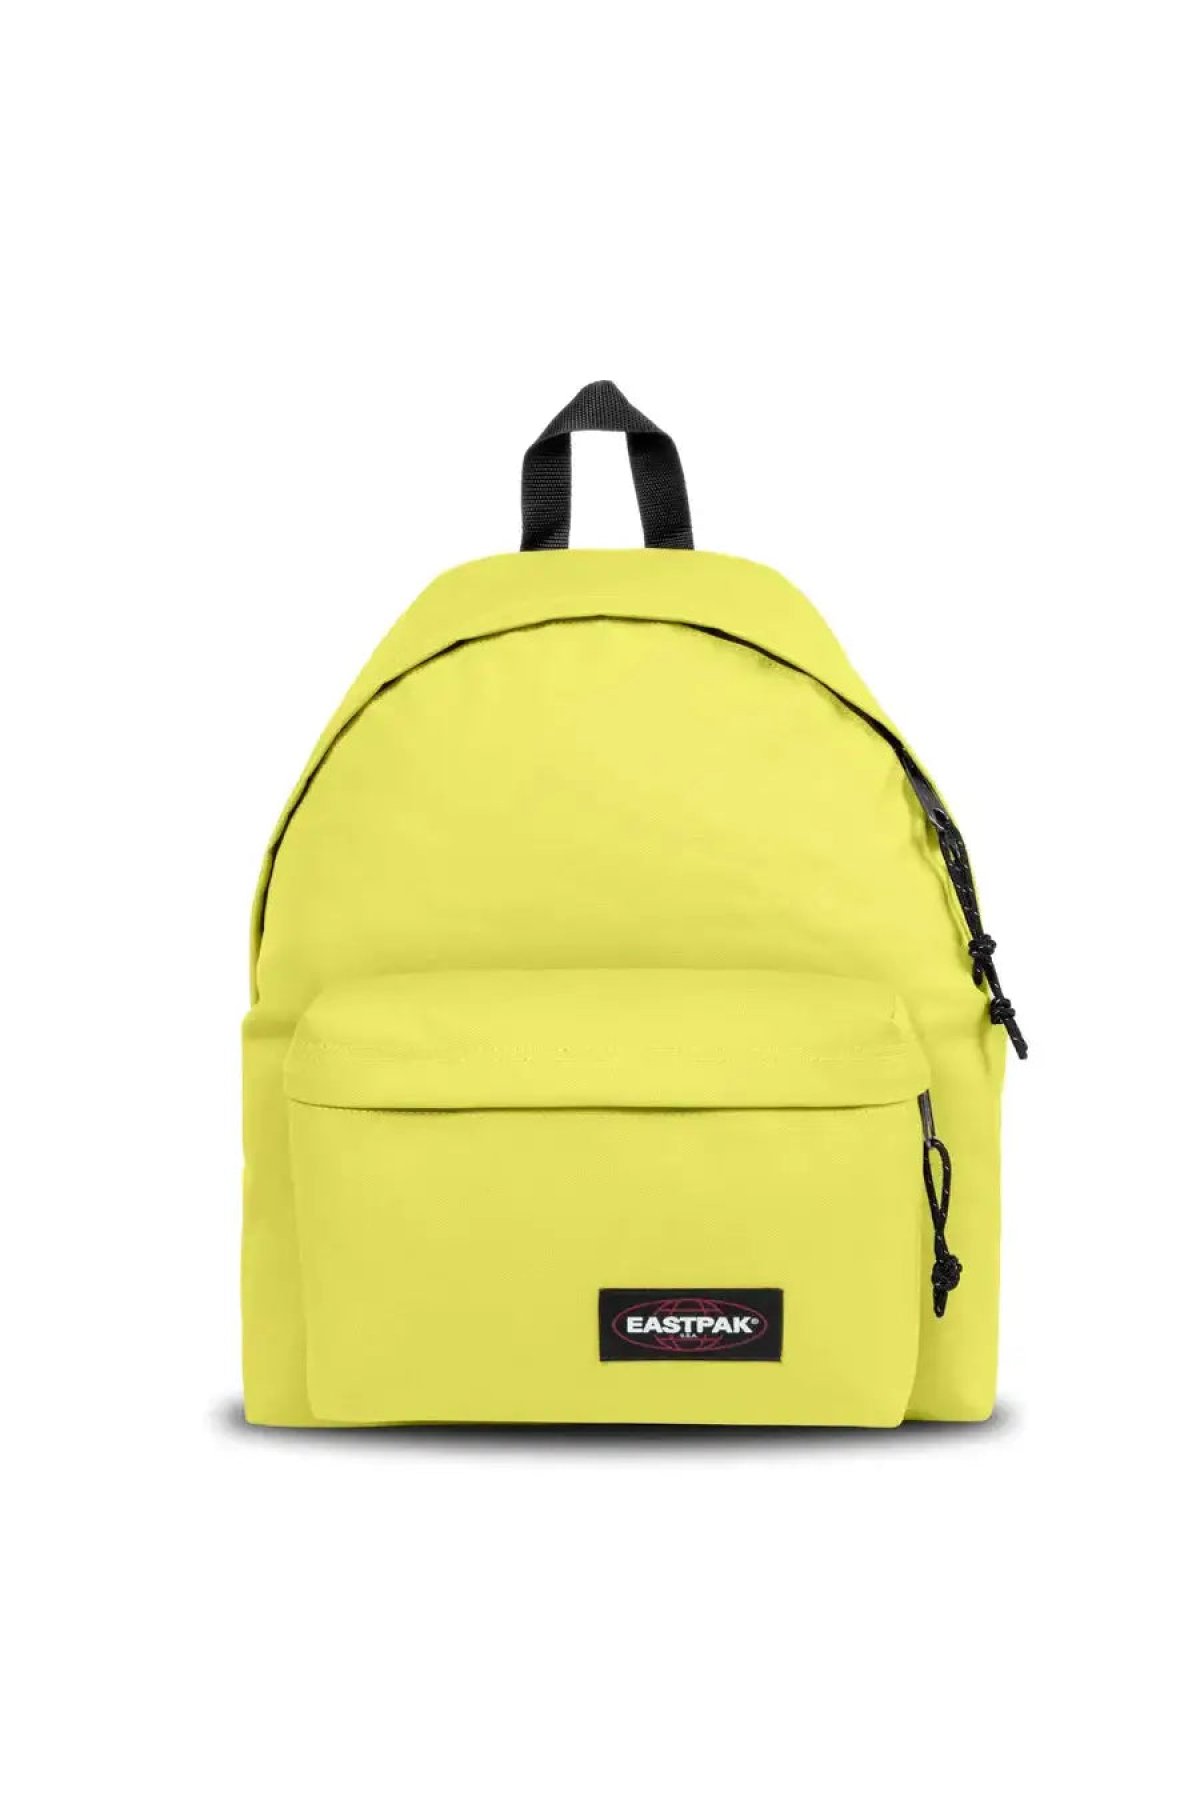 Eastpak EK0006204D41 Backpack žlutý 24l